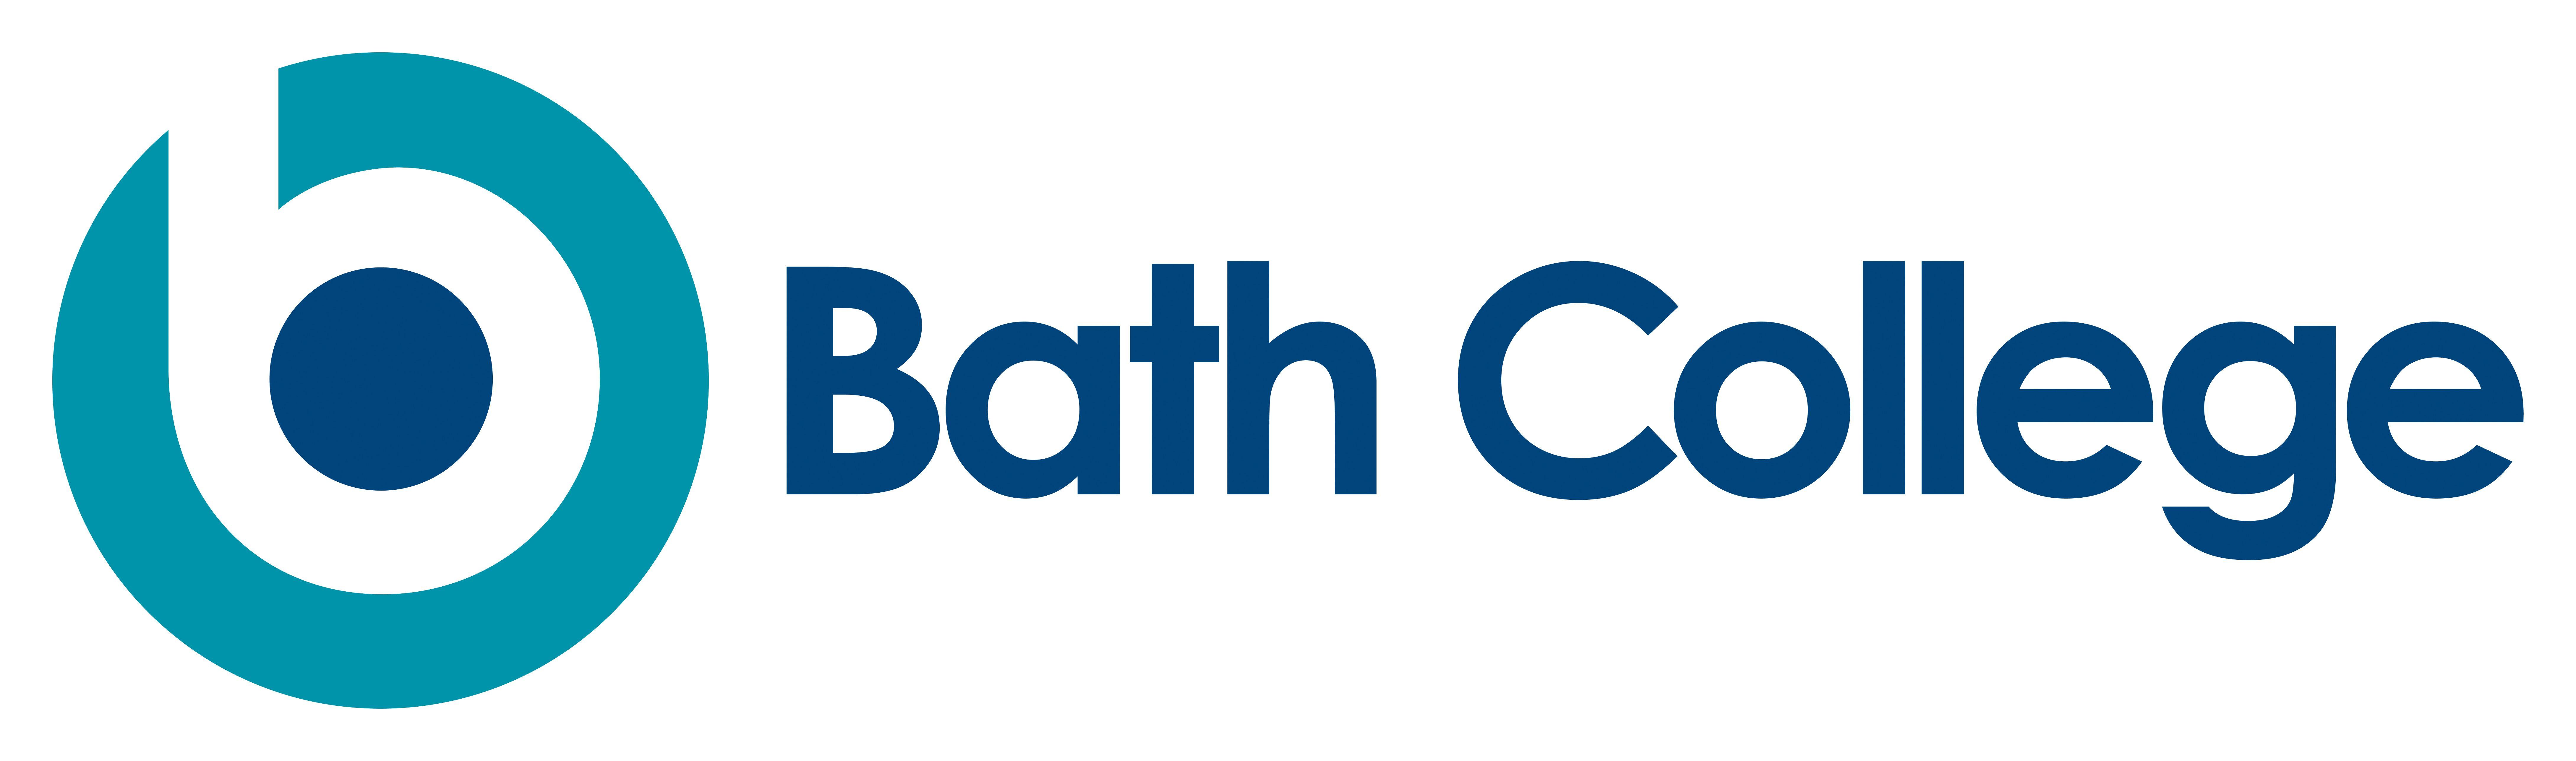 College Logo - Bath College Logo CMYK_Normal - Bath College | Bath College